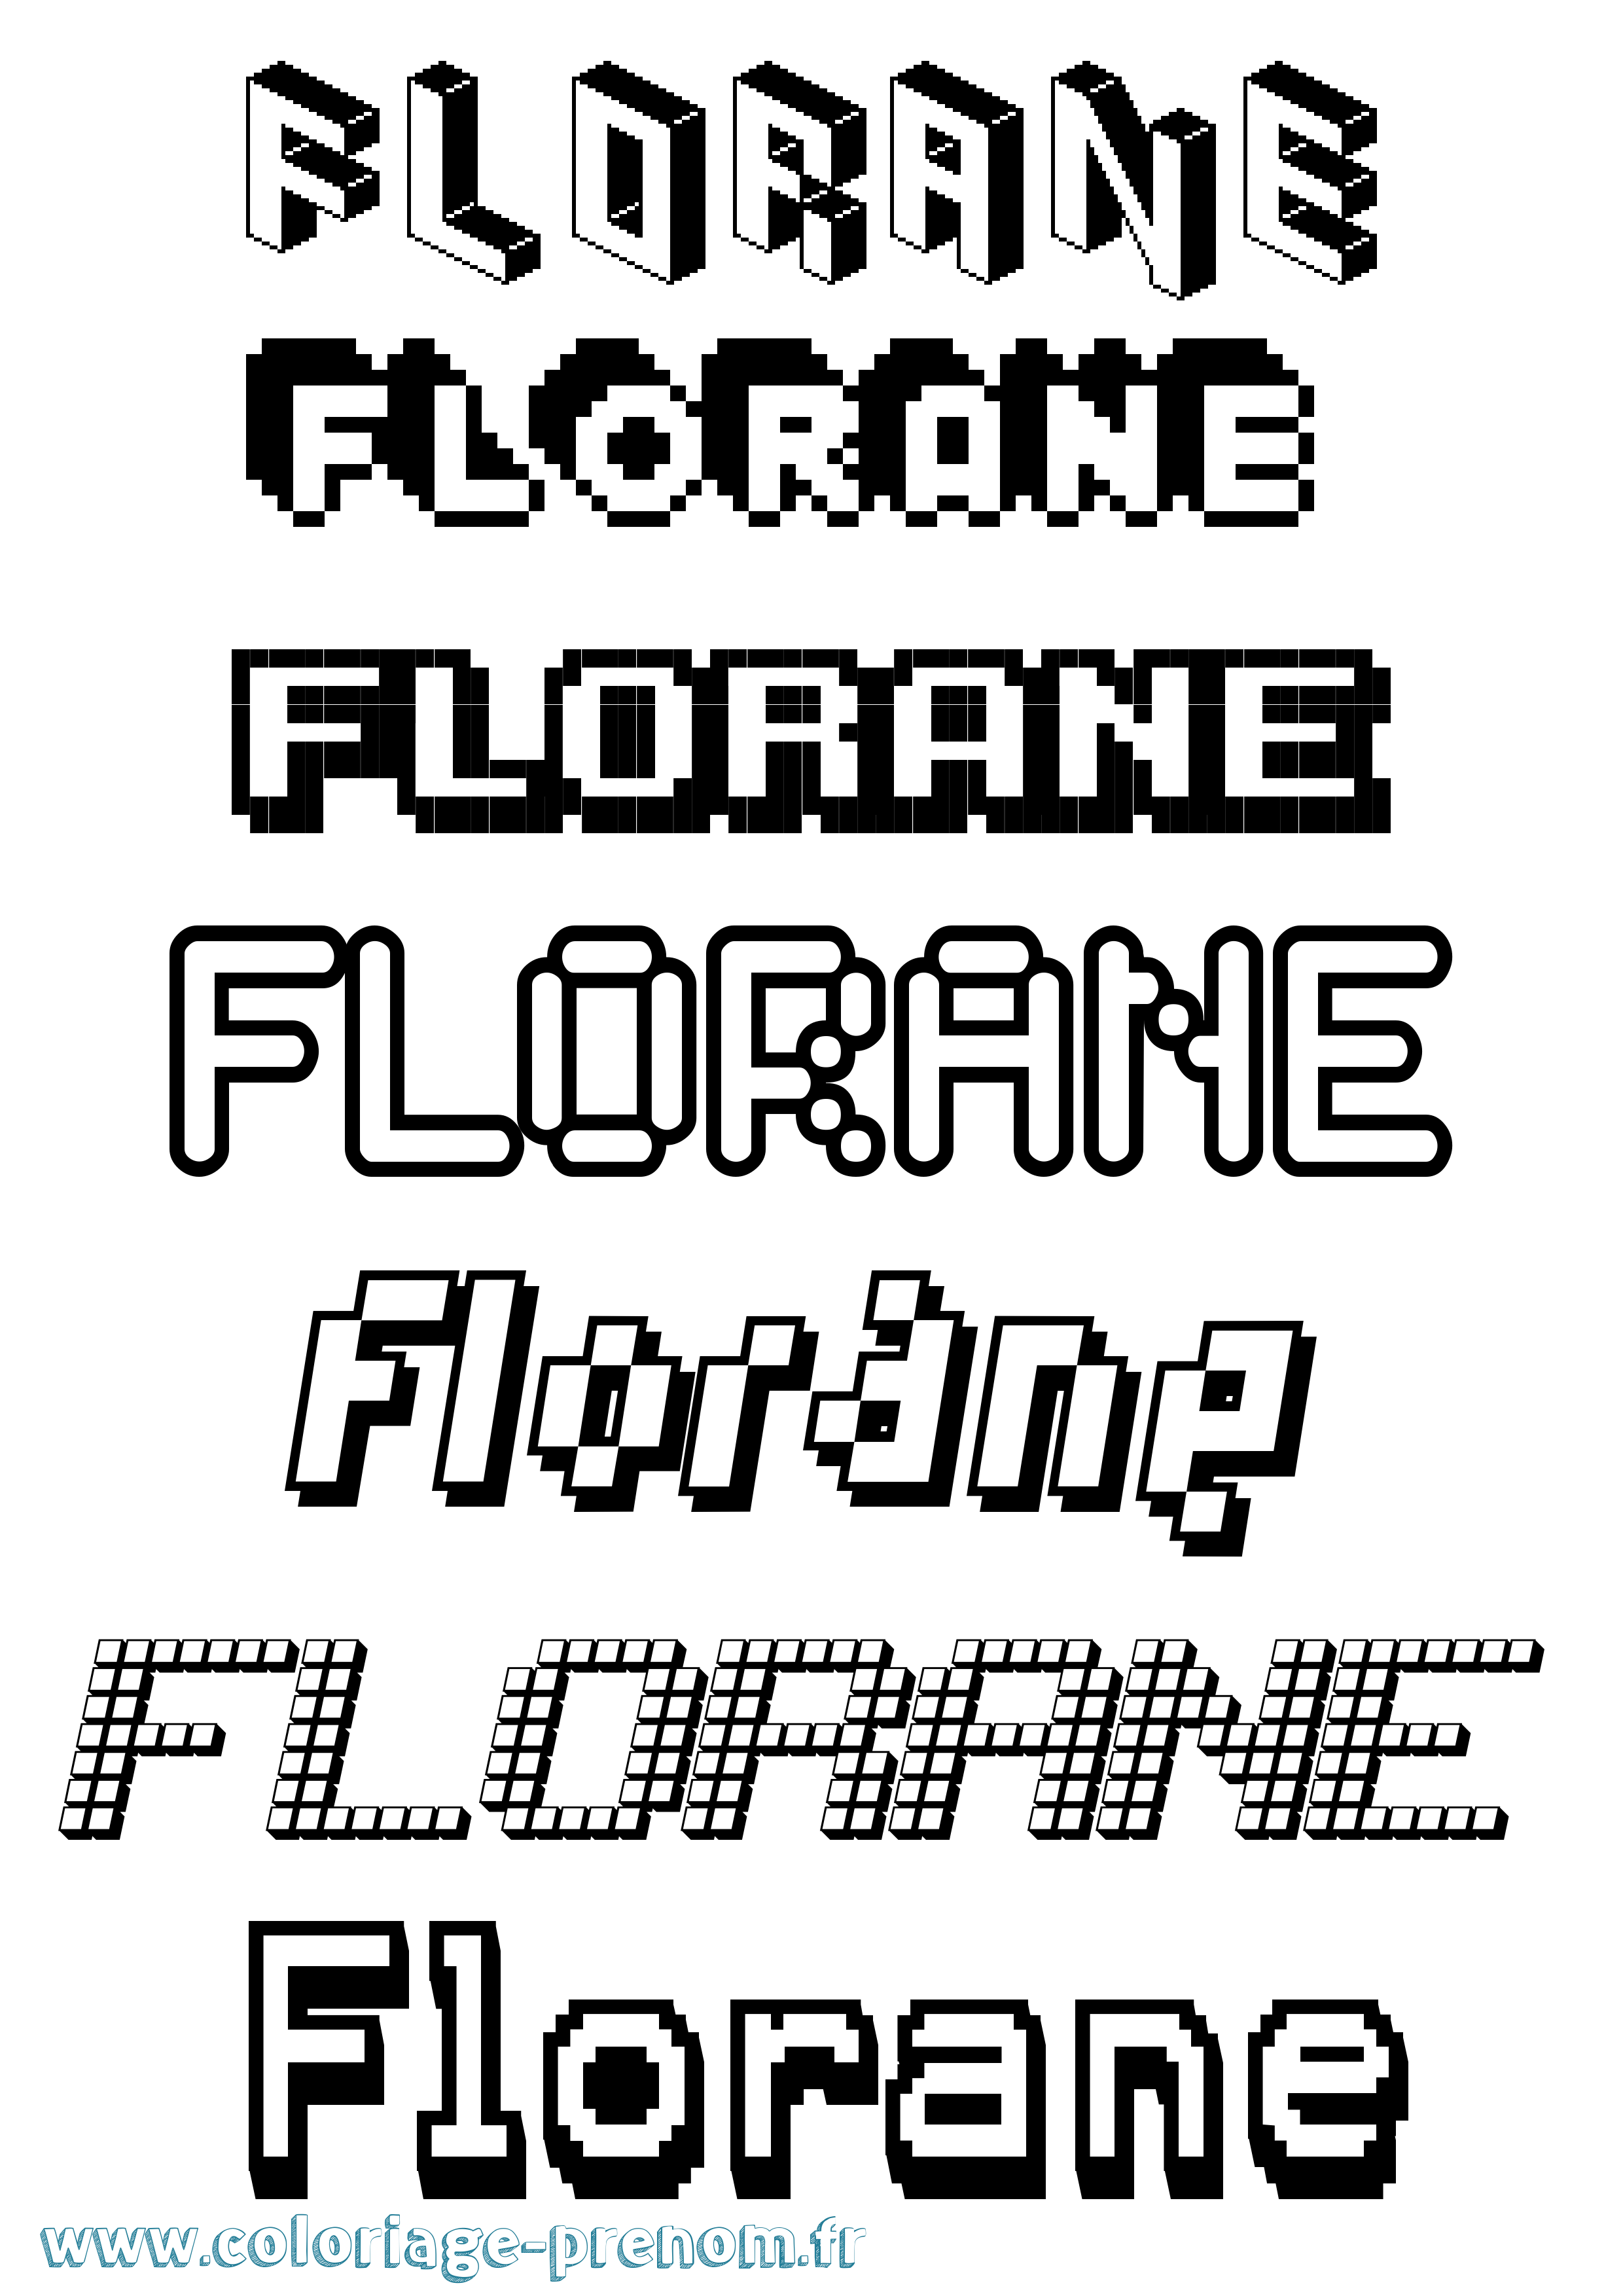 Coloriage prénom Florane Pixel